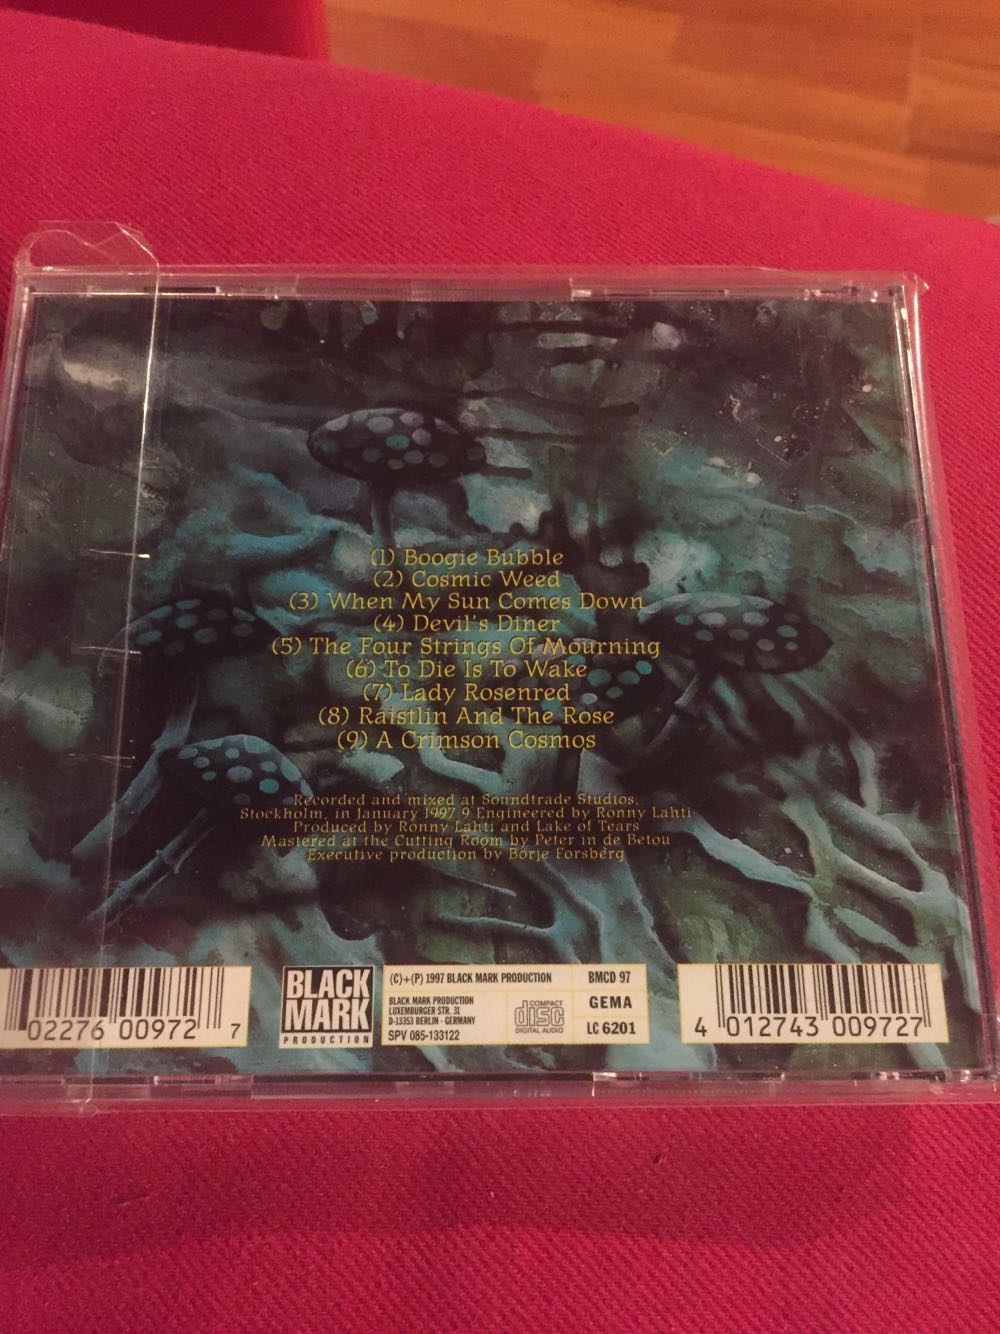 A Crimson Cosmos - Lake Of Tears (CD) music collectible [Barcode 4012743009727] - Main Image 2